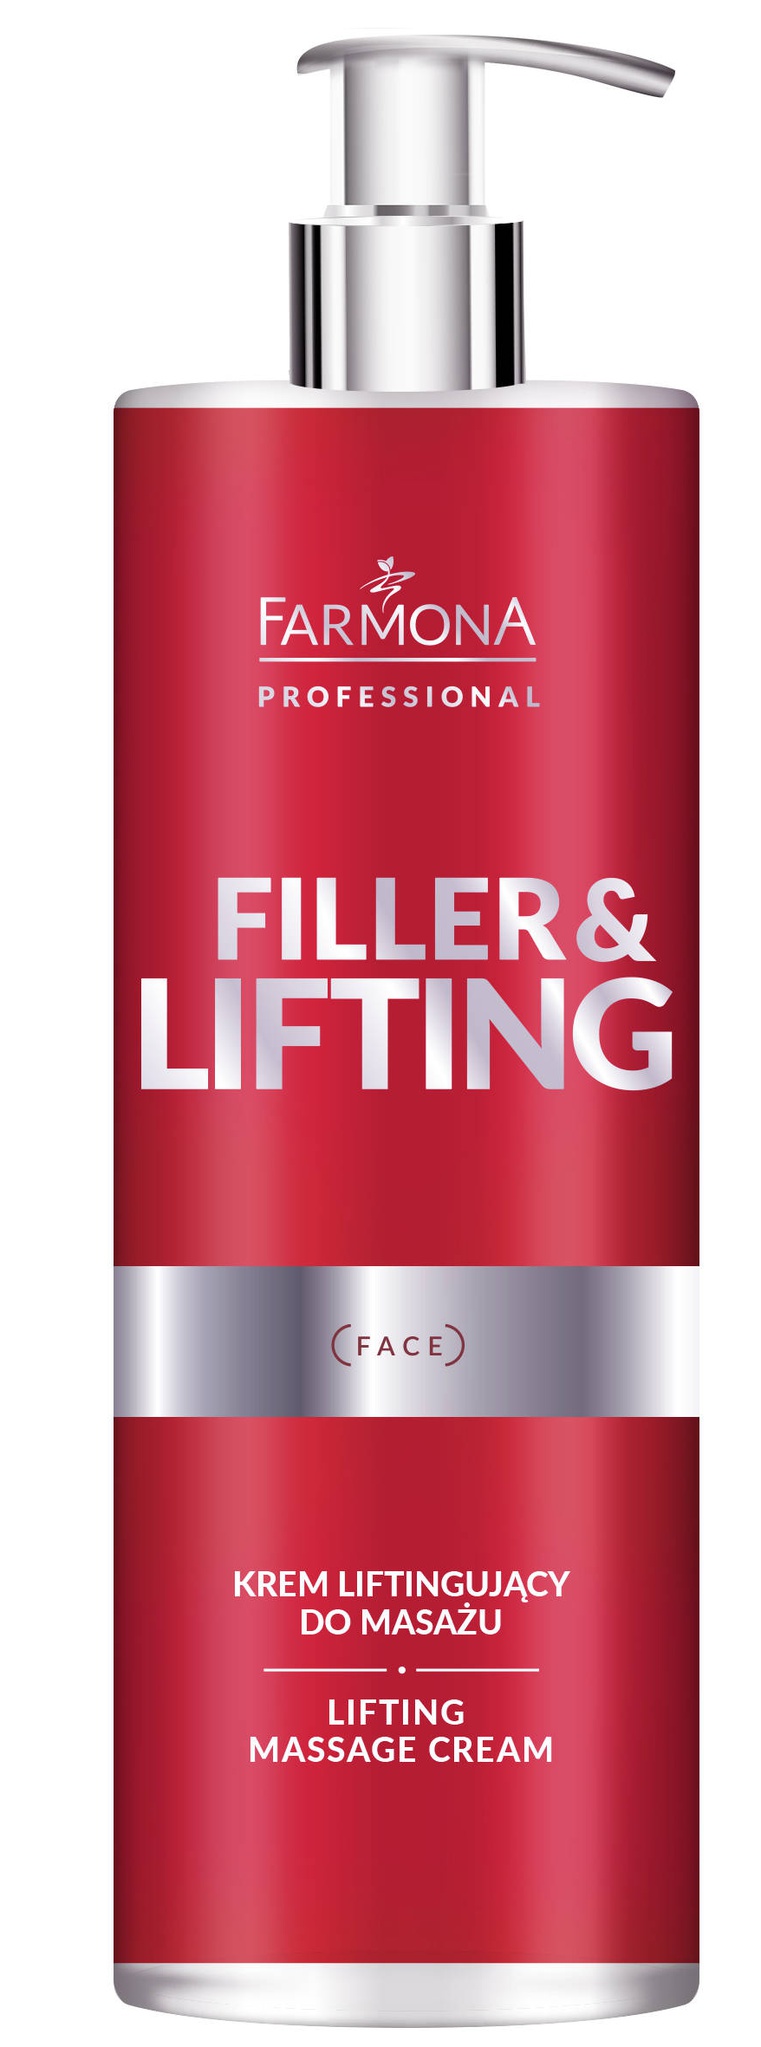 Farmona Professional Filler & Lifting Massage Cream